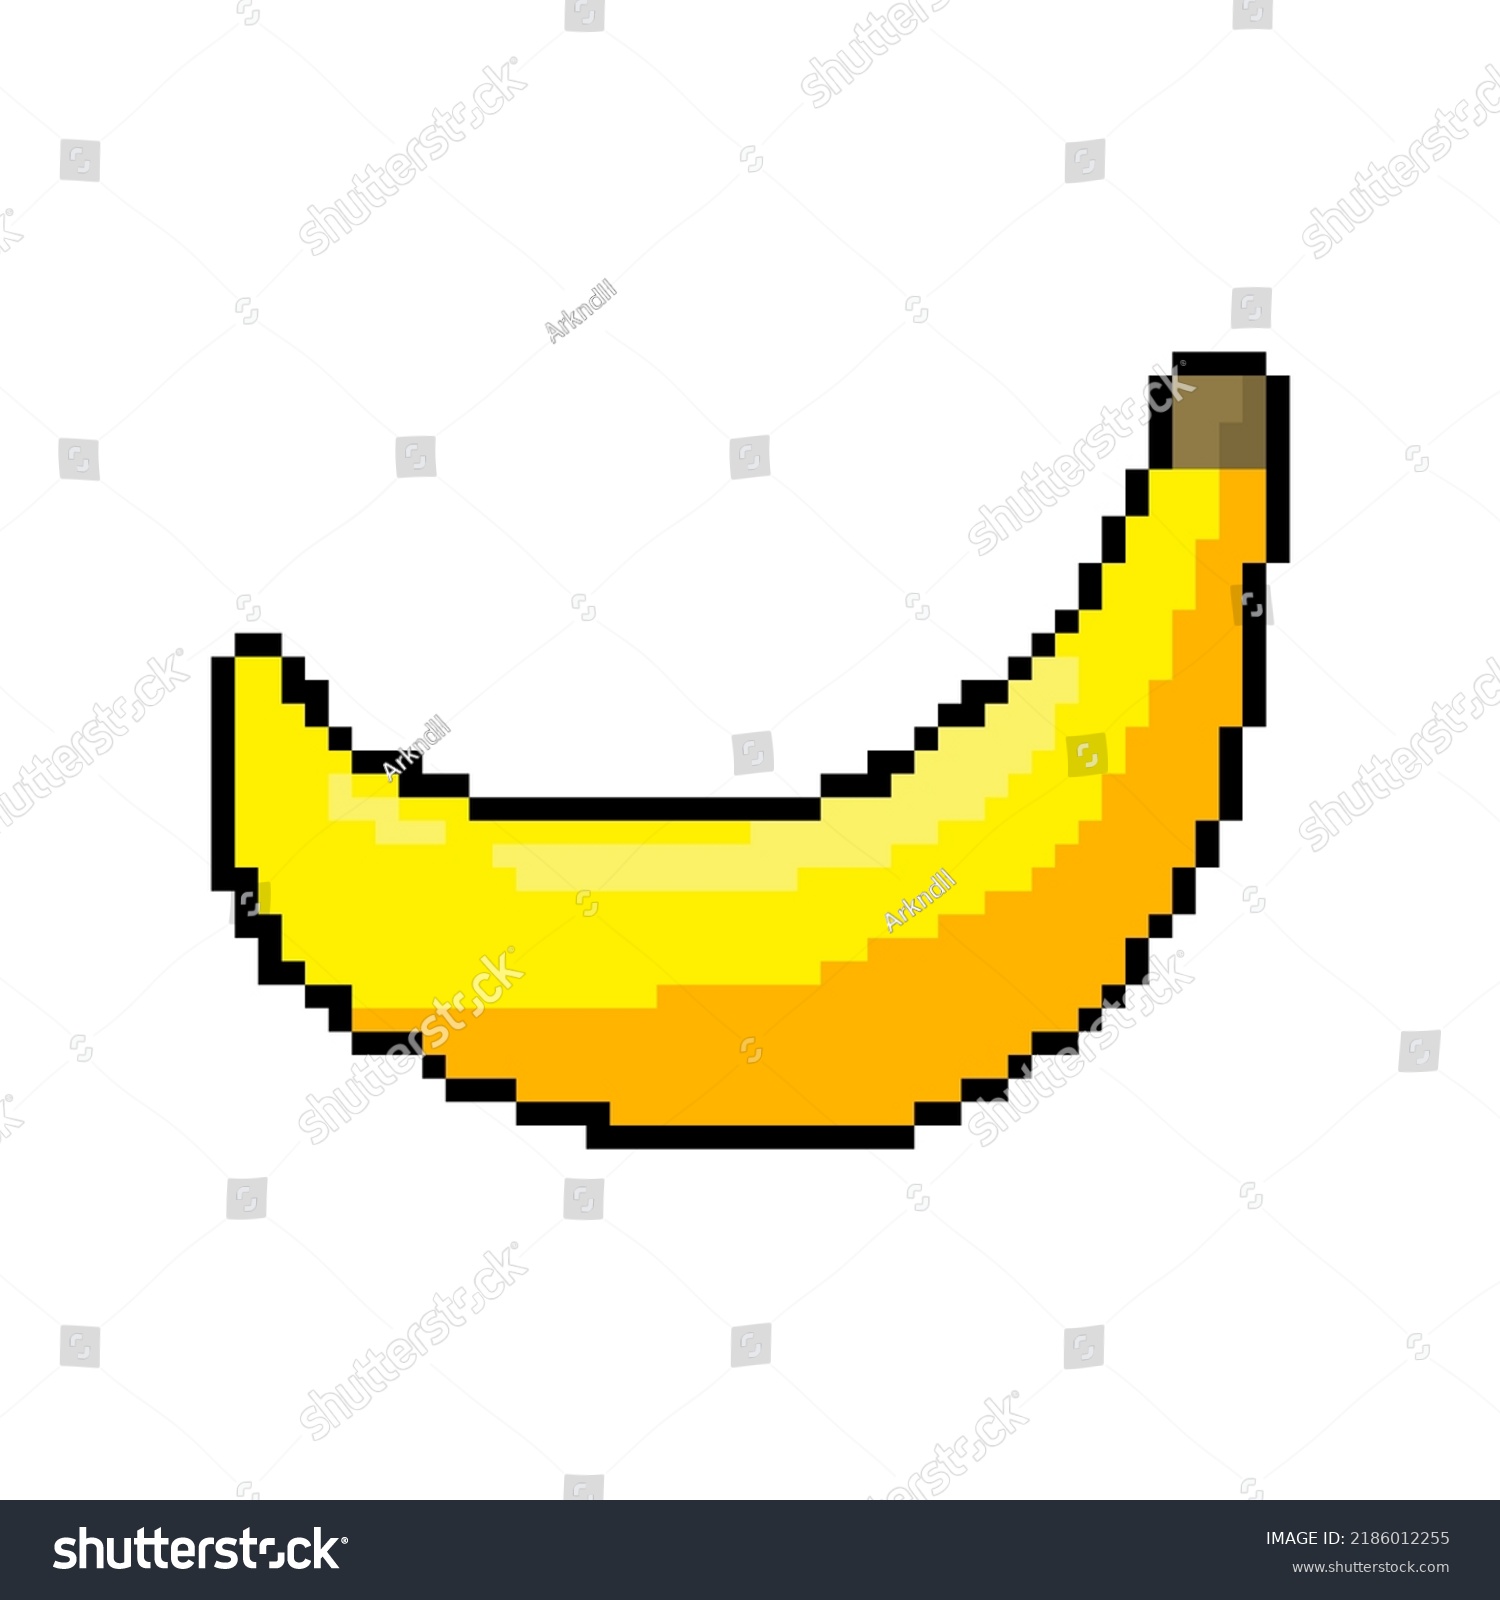 Yellow Banana Pixel Art Stock Illustration 2186012255 | Shutterstock